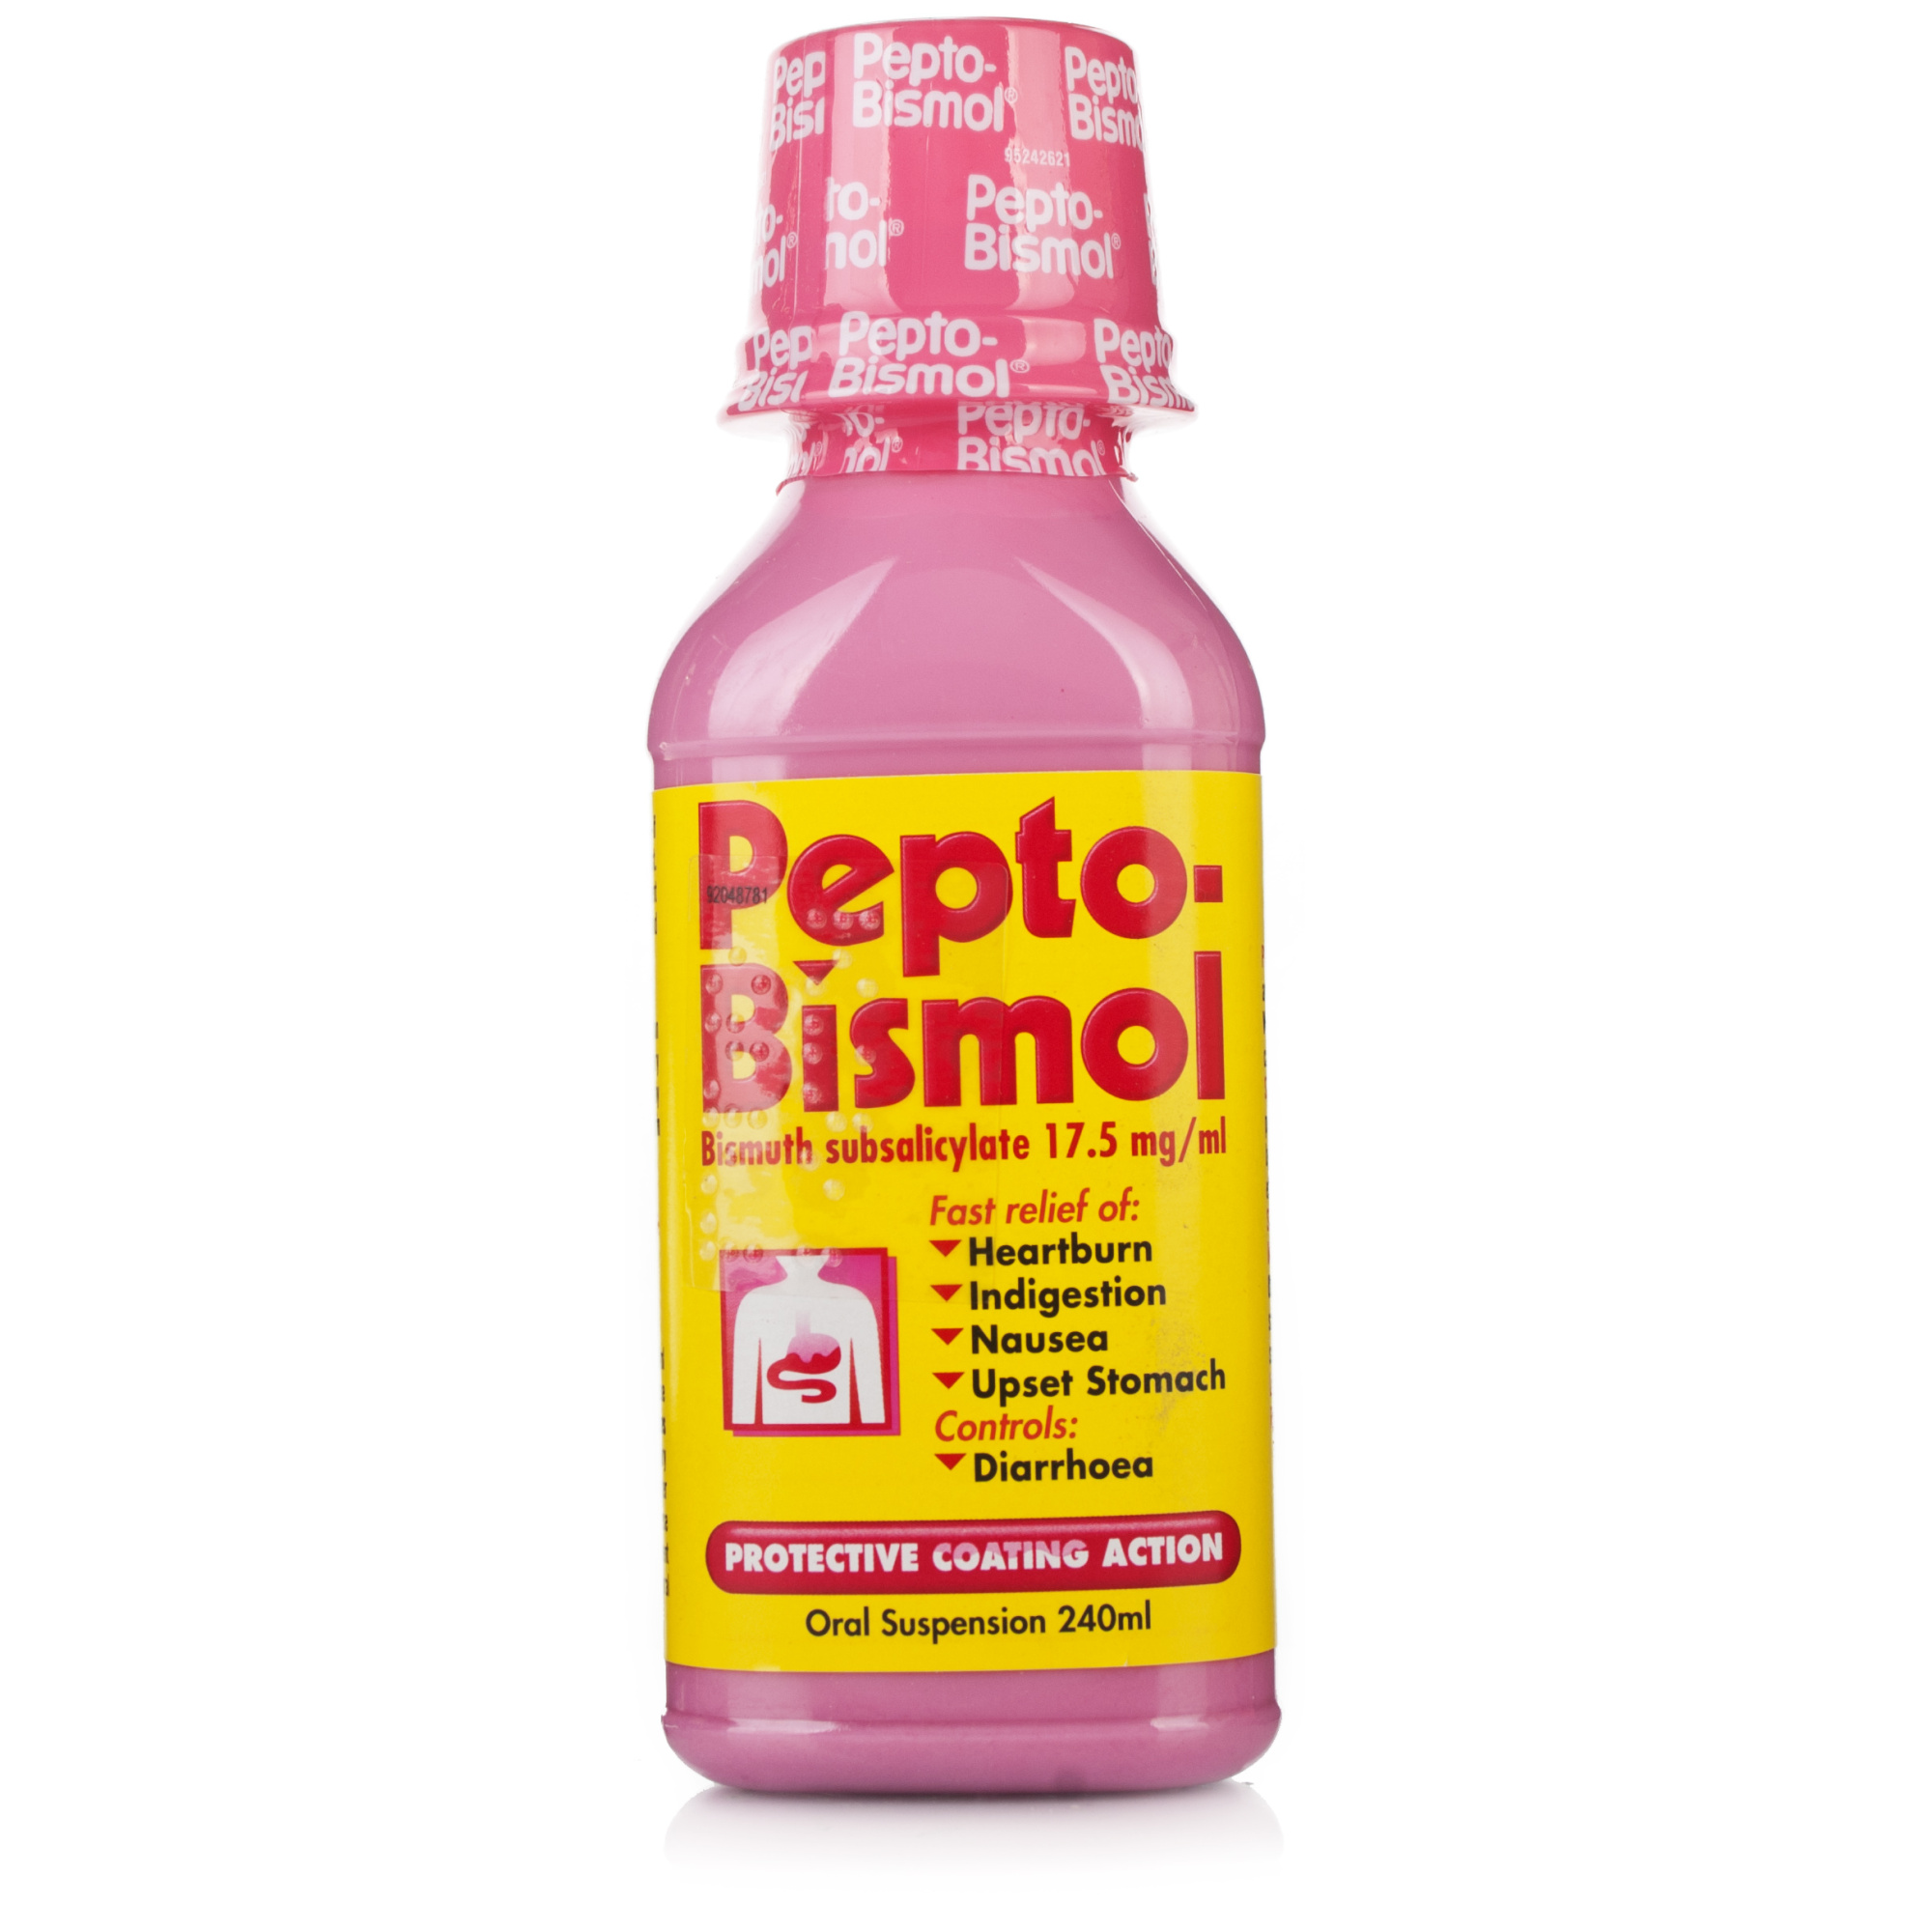 Buy Pepto-Bismol, 3.98, Diarrhoea.